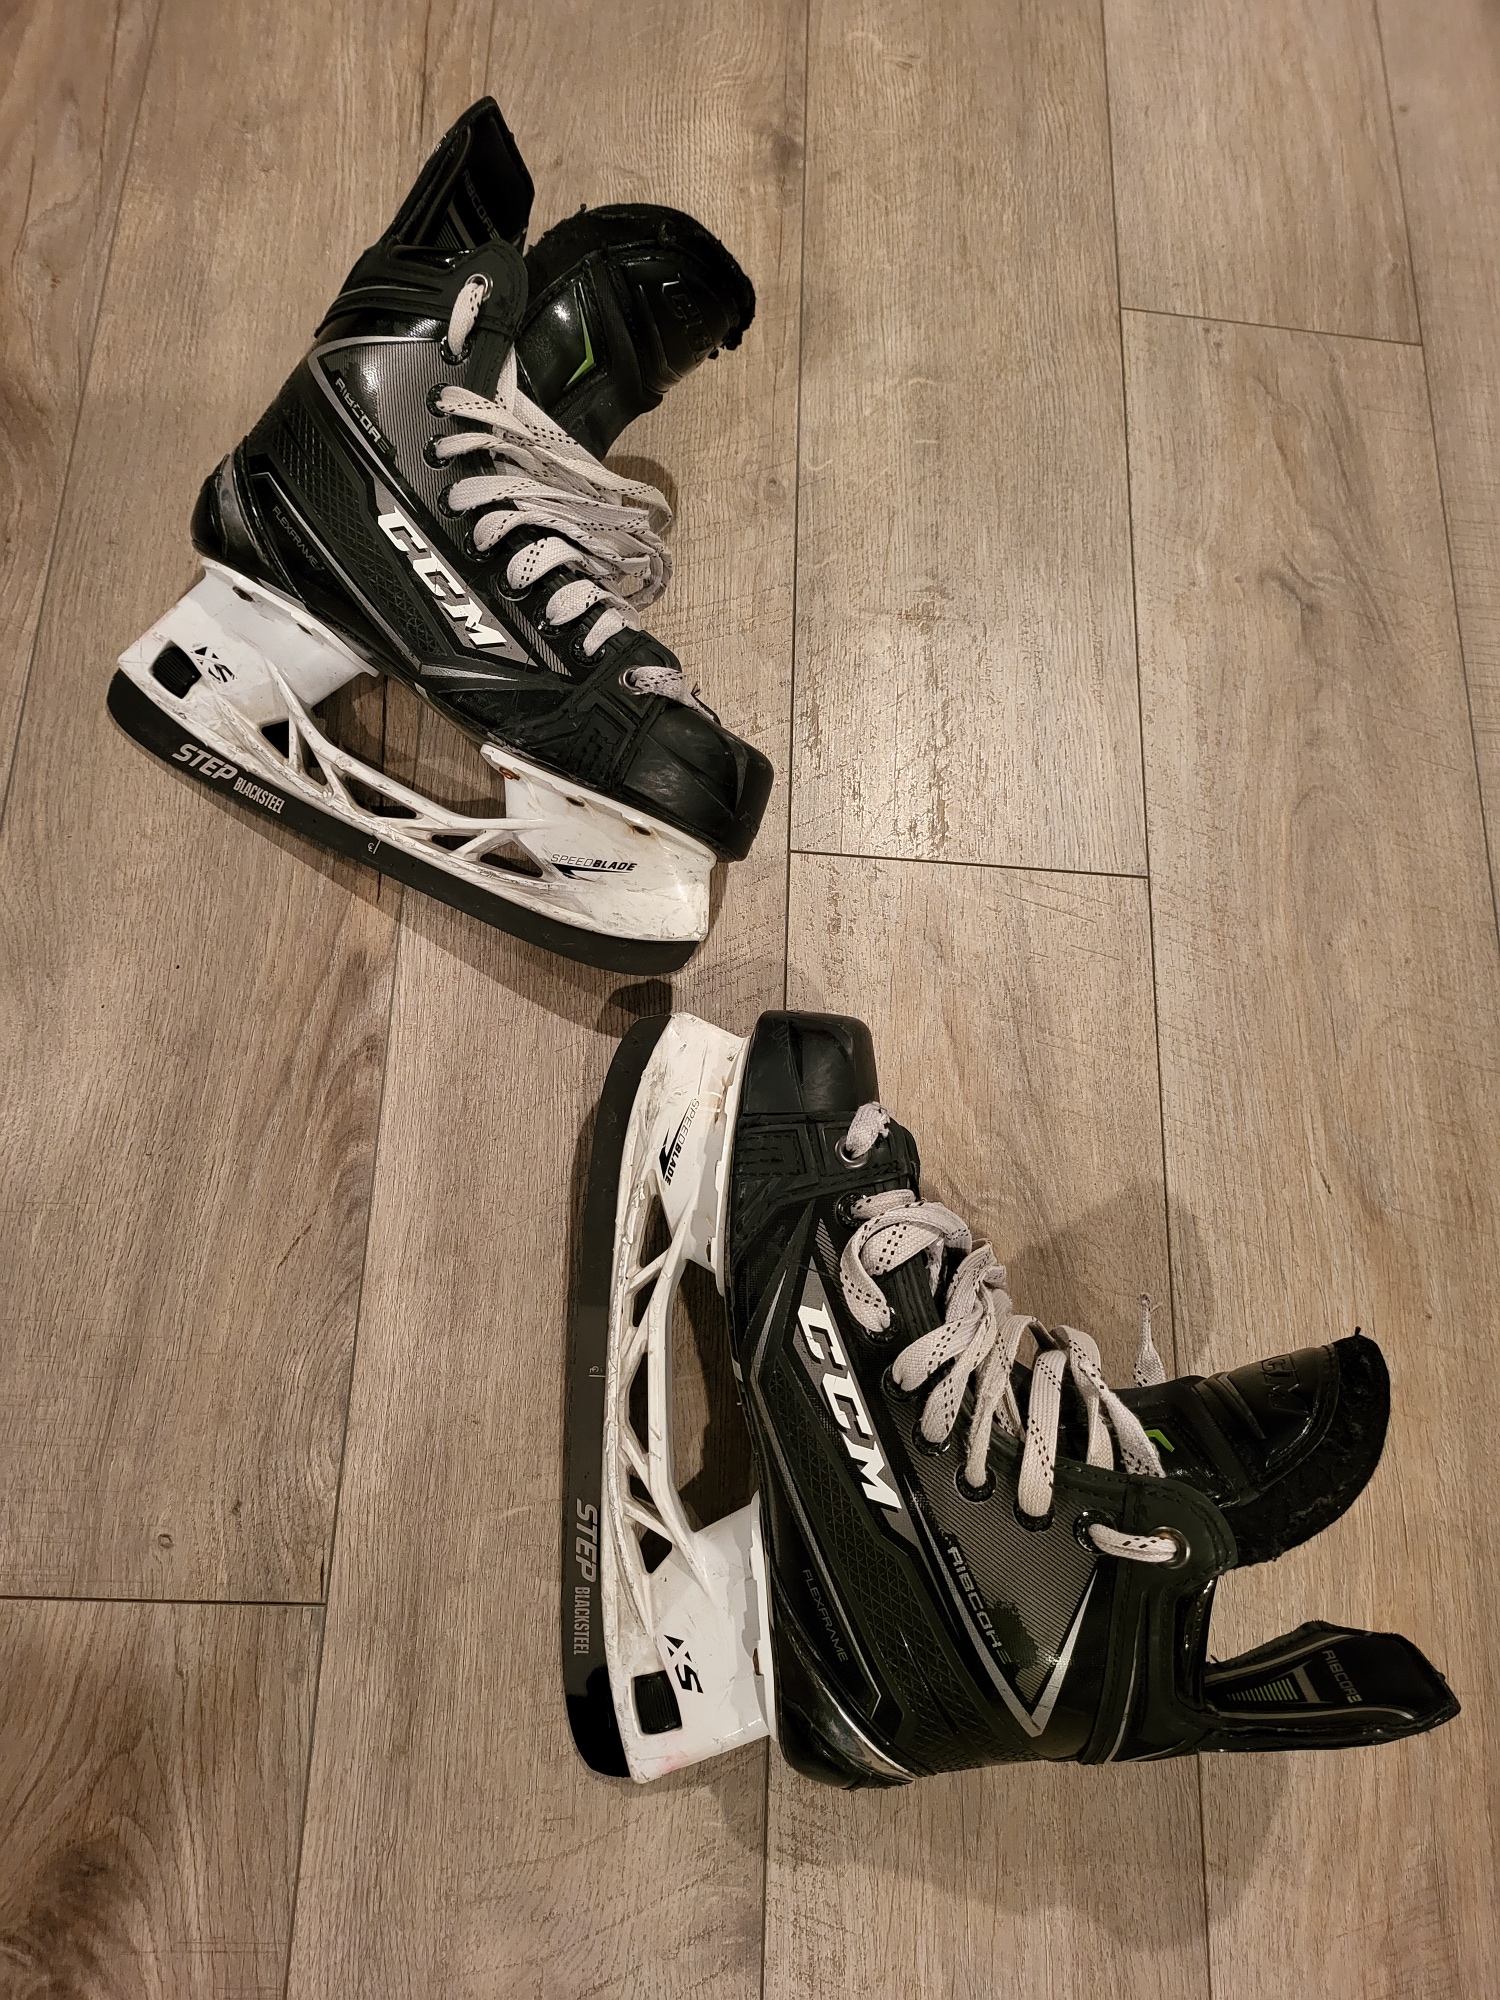 Intermediate Used CCM Ribcor 80K Hockey Skates Regular Width Size 4.5 with Black StepSteel